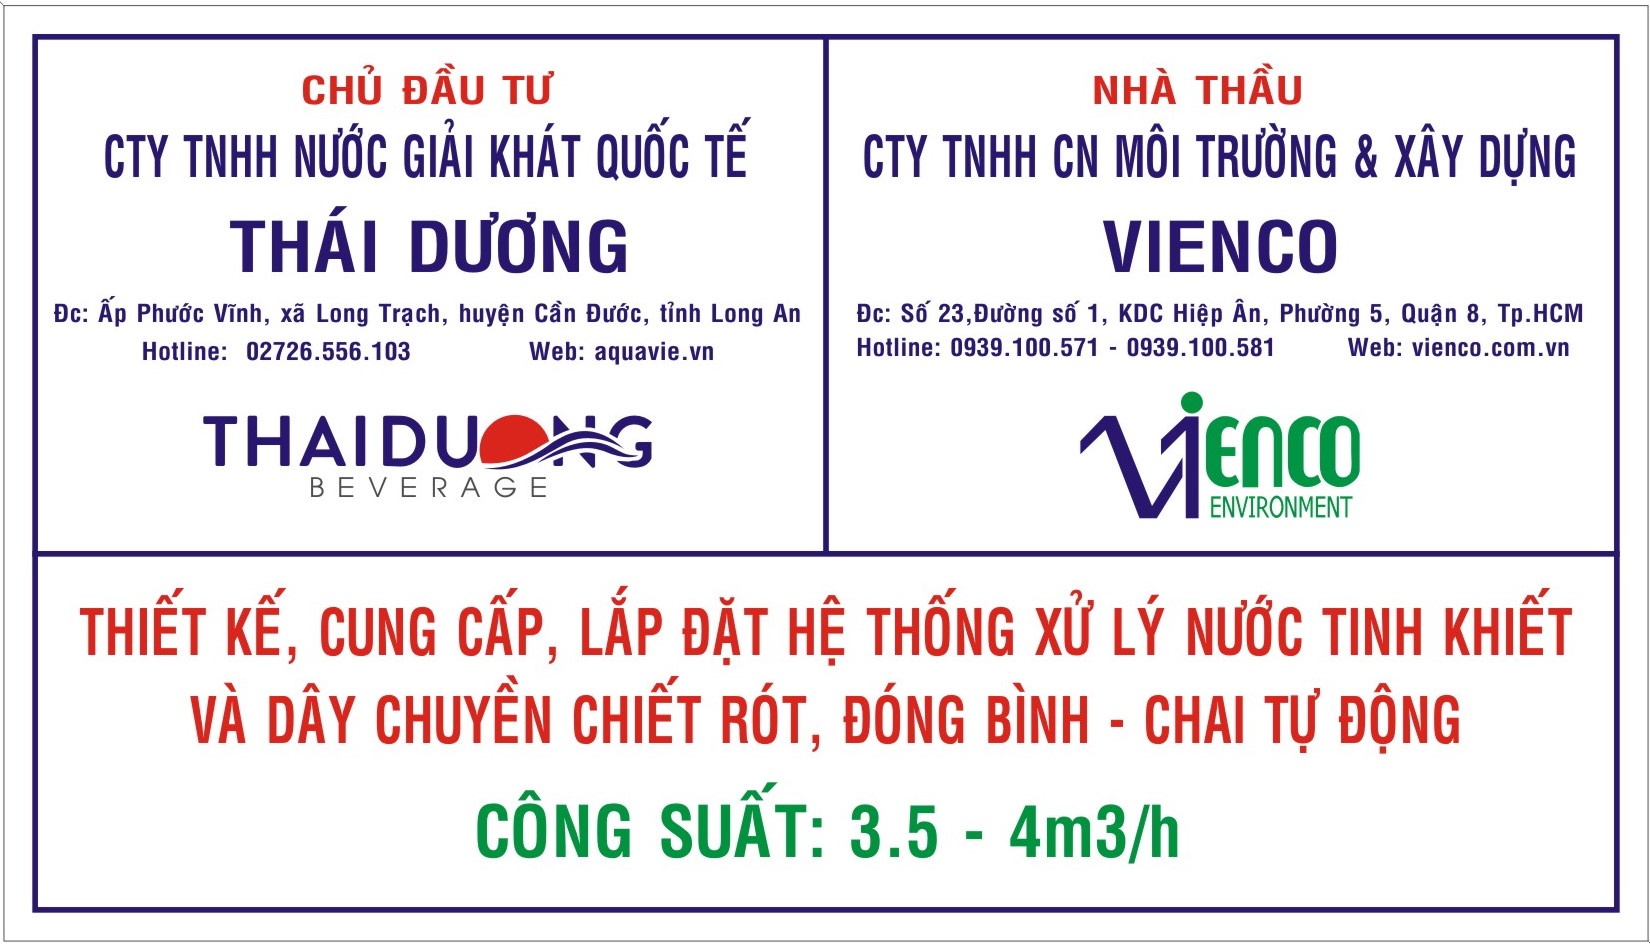 THAI DUONG